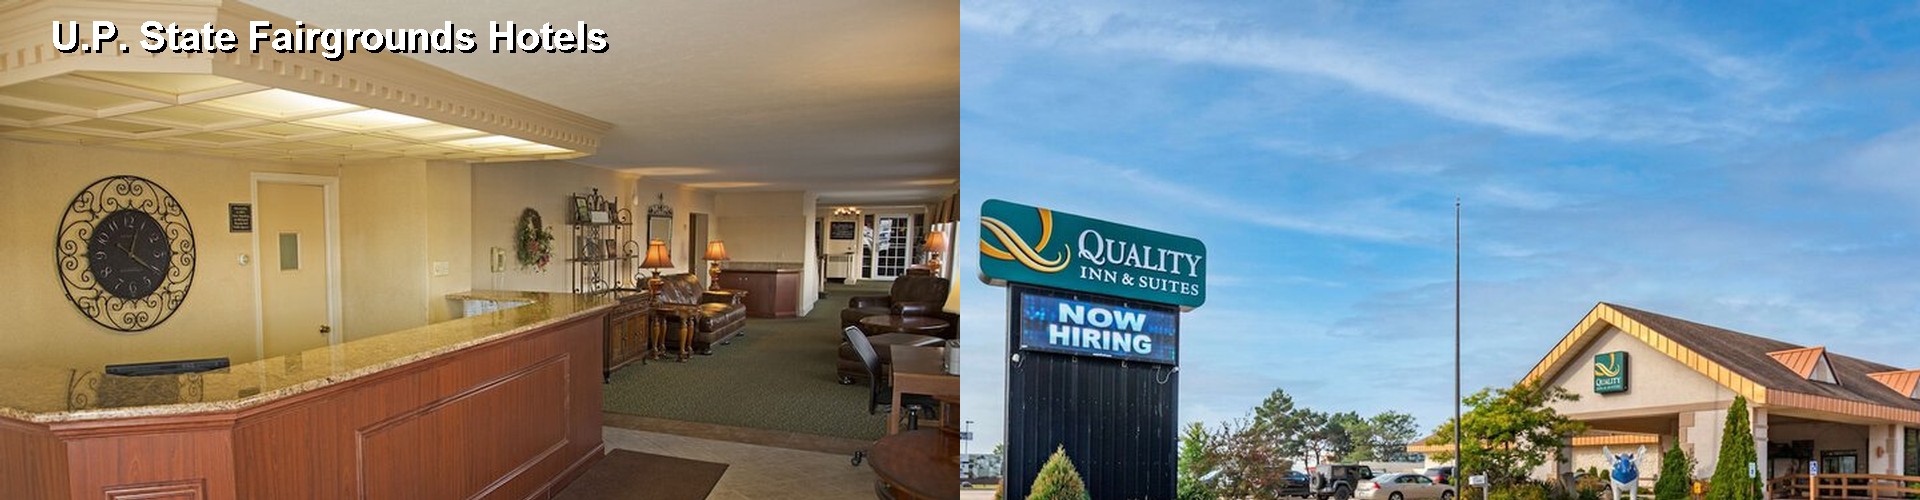 3 Best Hotels near U.P. State Fairgrounds